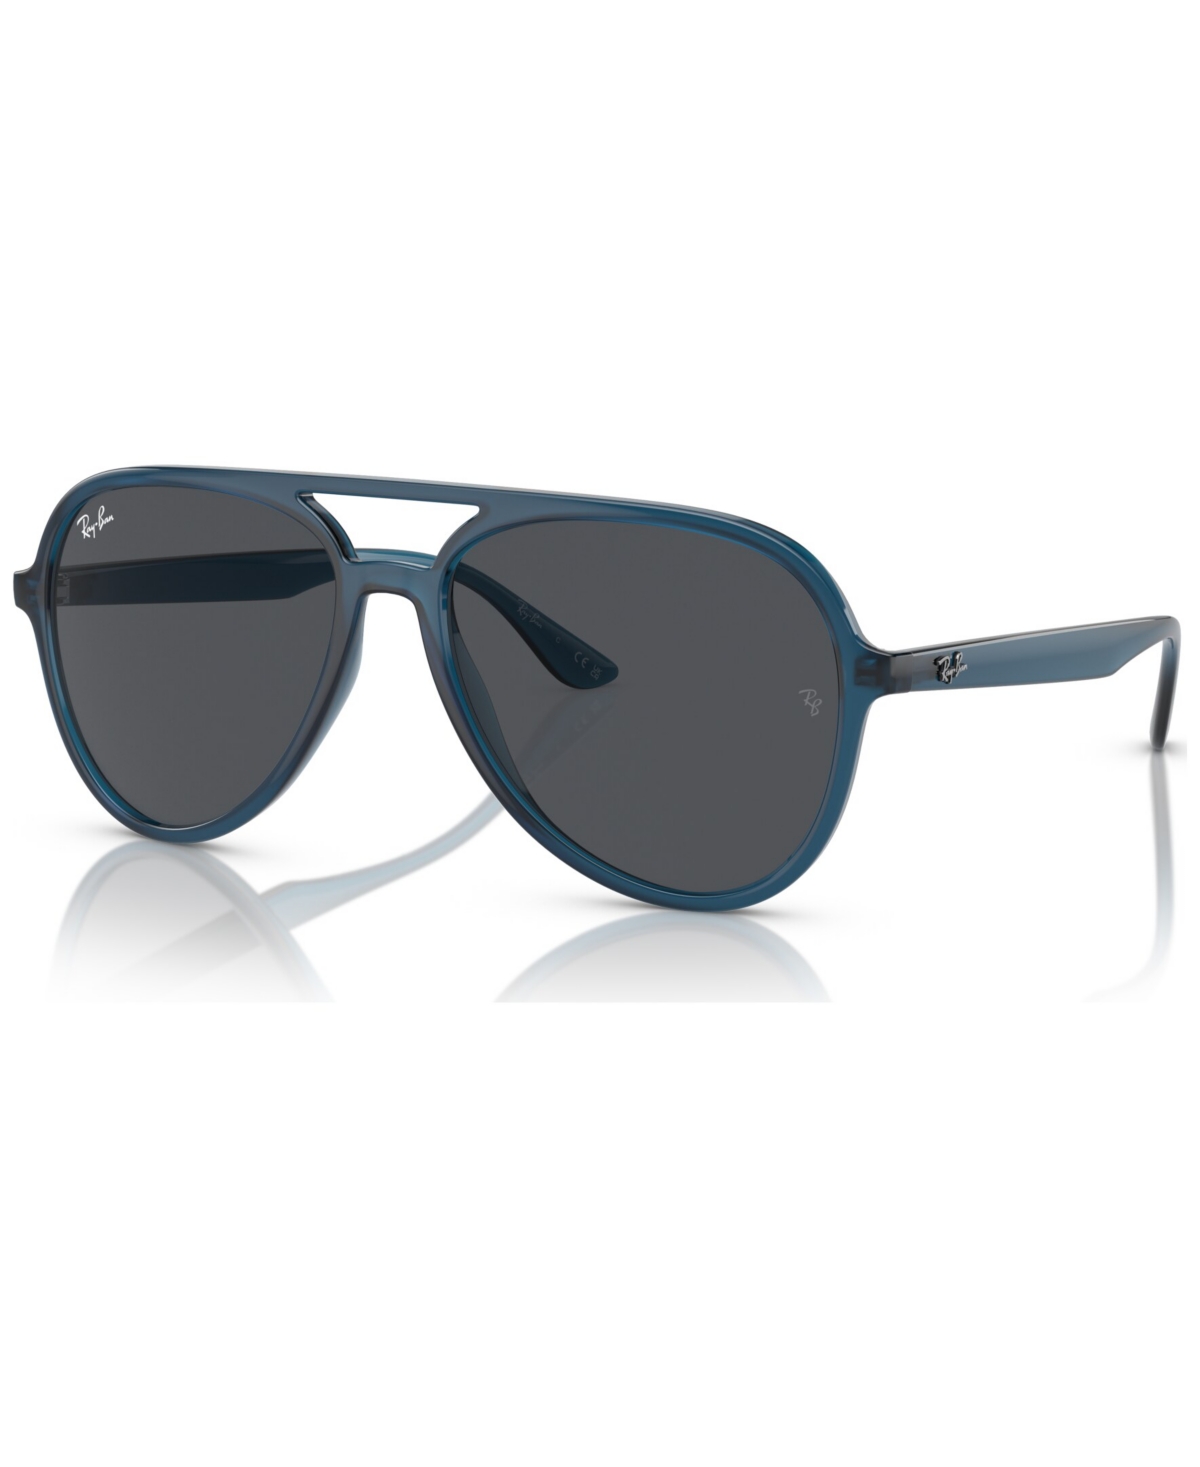 Ray Ban Unisex Low Bridge Fit Sunglasses, Rb4376 In Opal Dark Blue